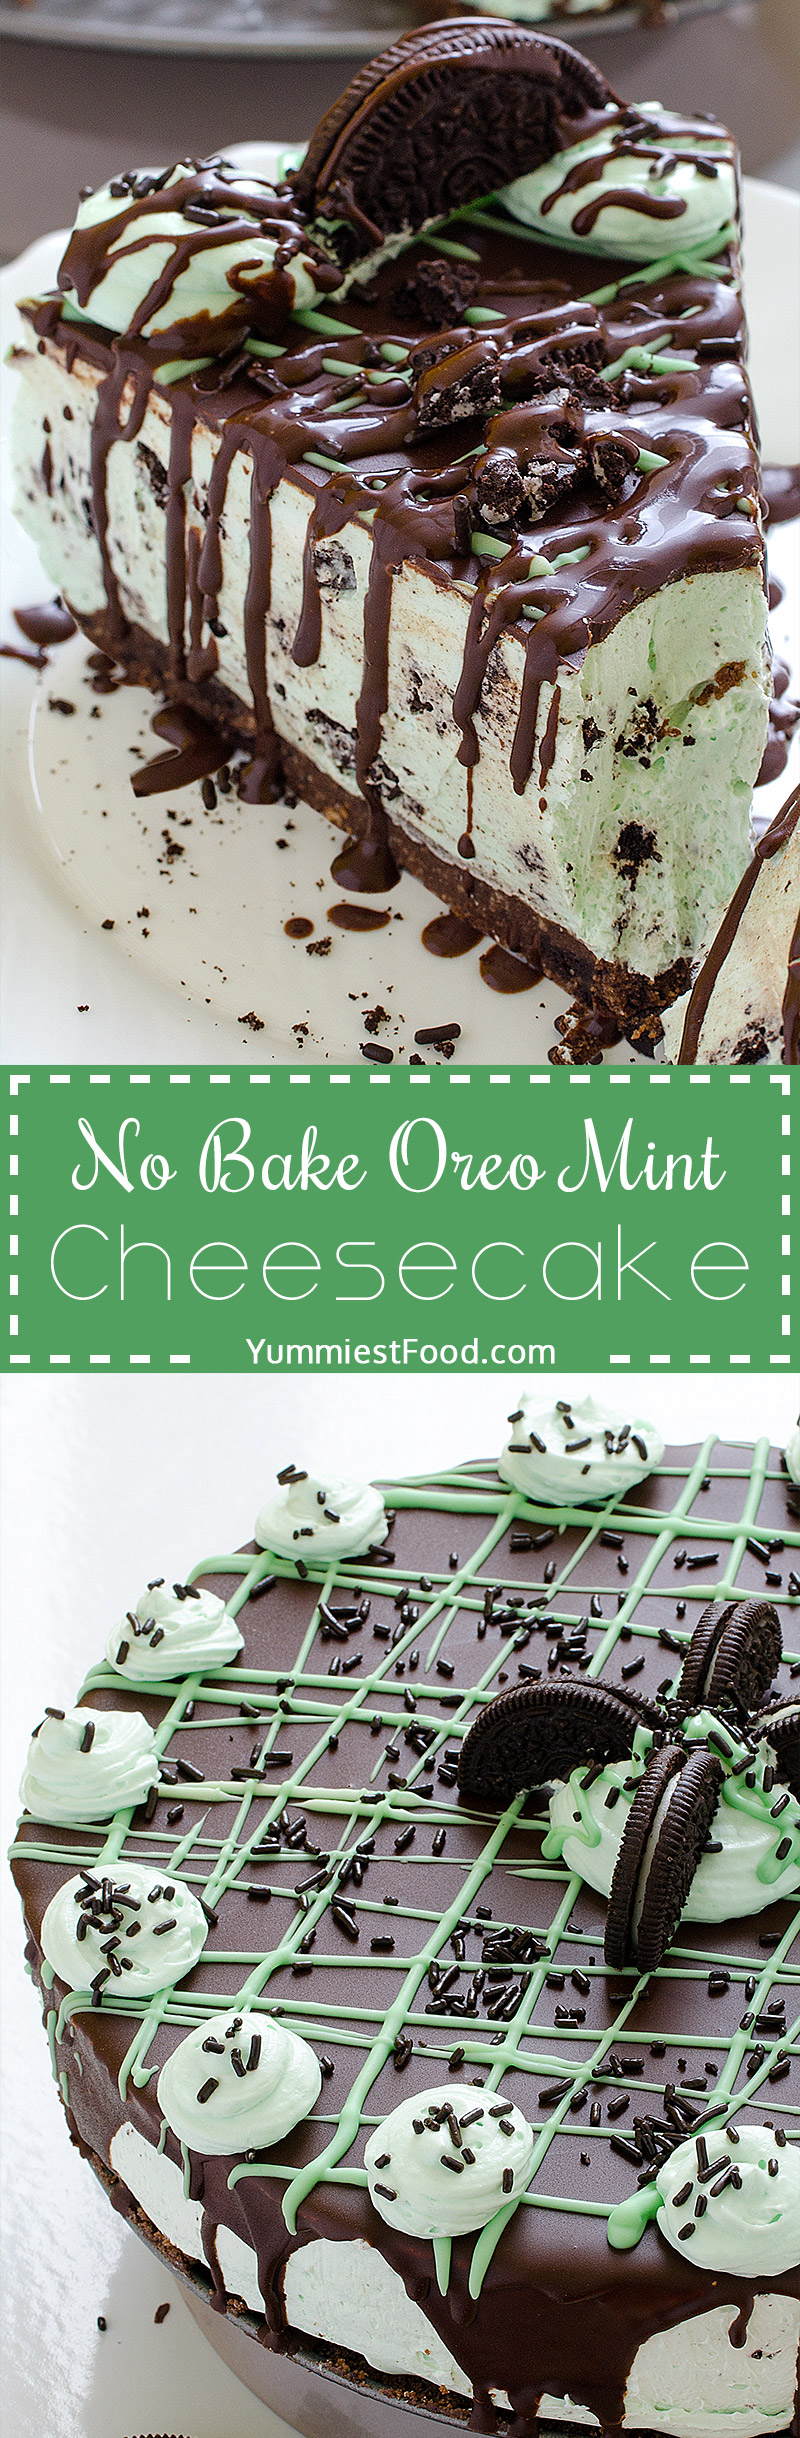 No Bake Oreo Mint Cheesecake - So easy to make without baking